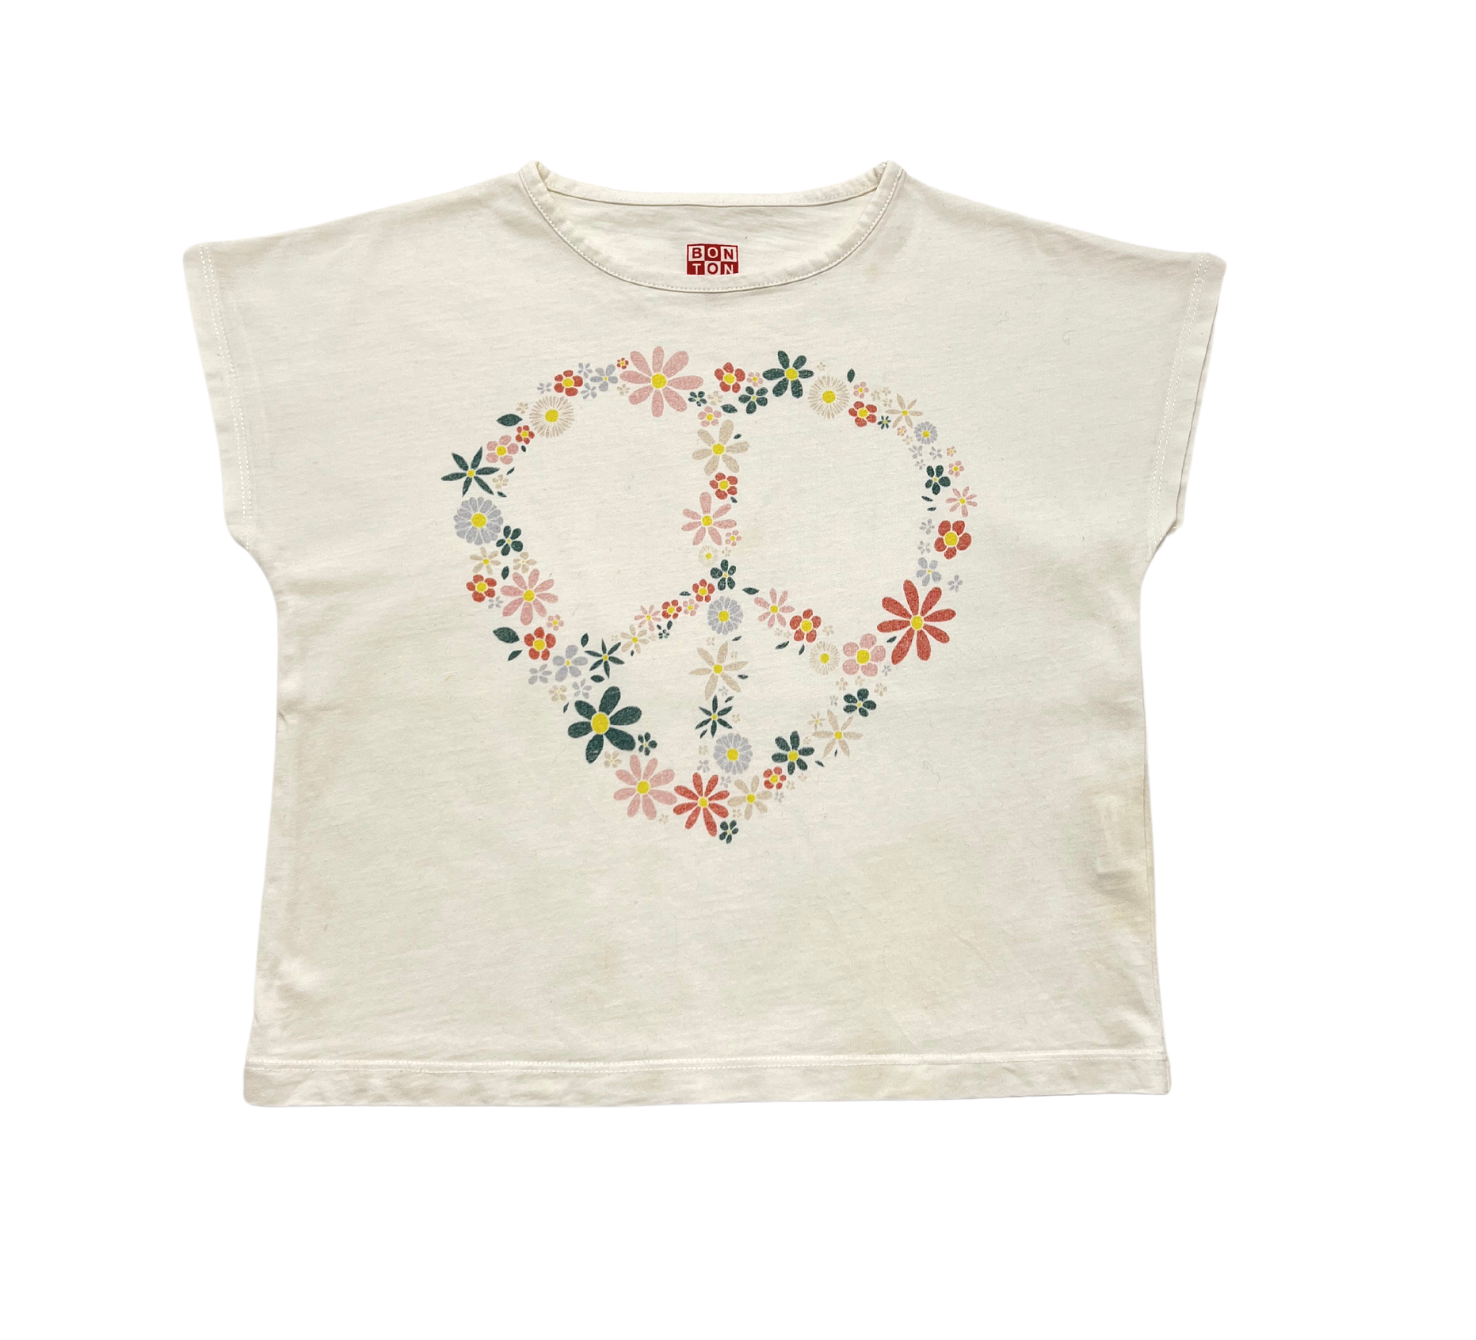 BONTON - Peace heart T-shirt - 4 years old